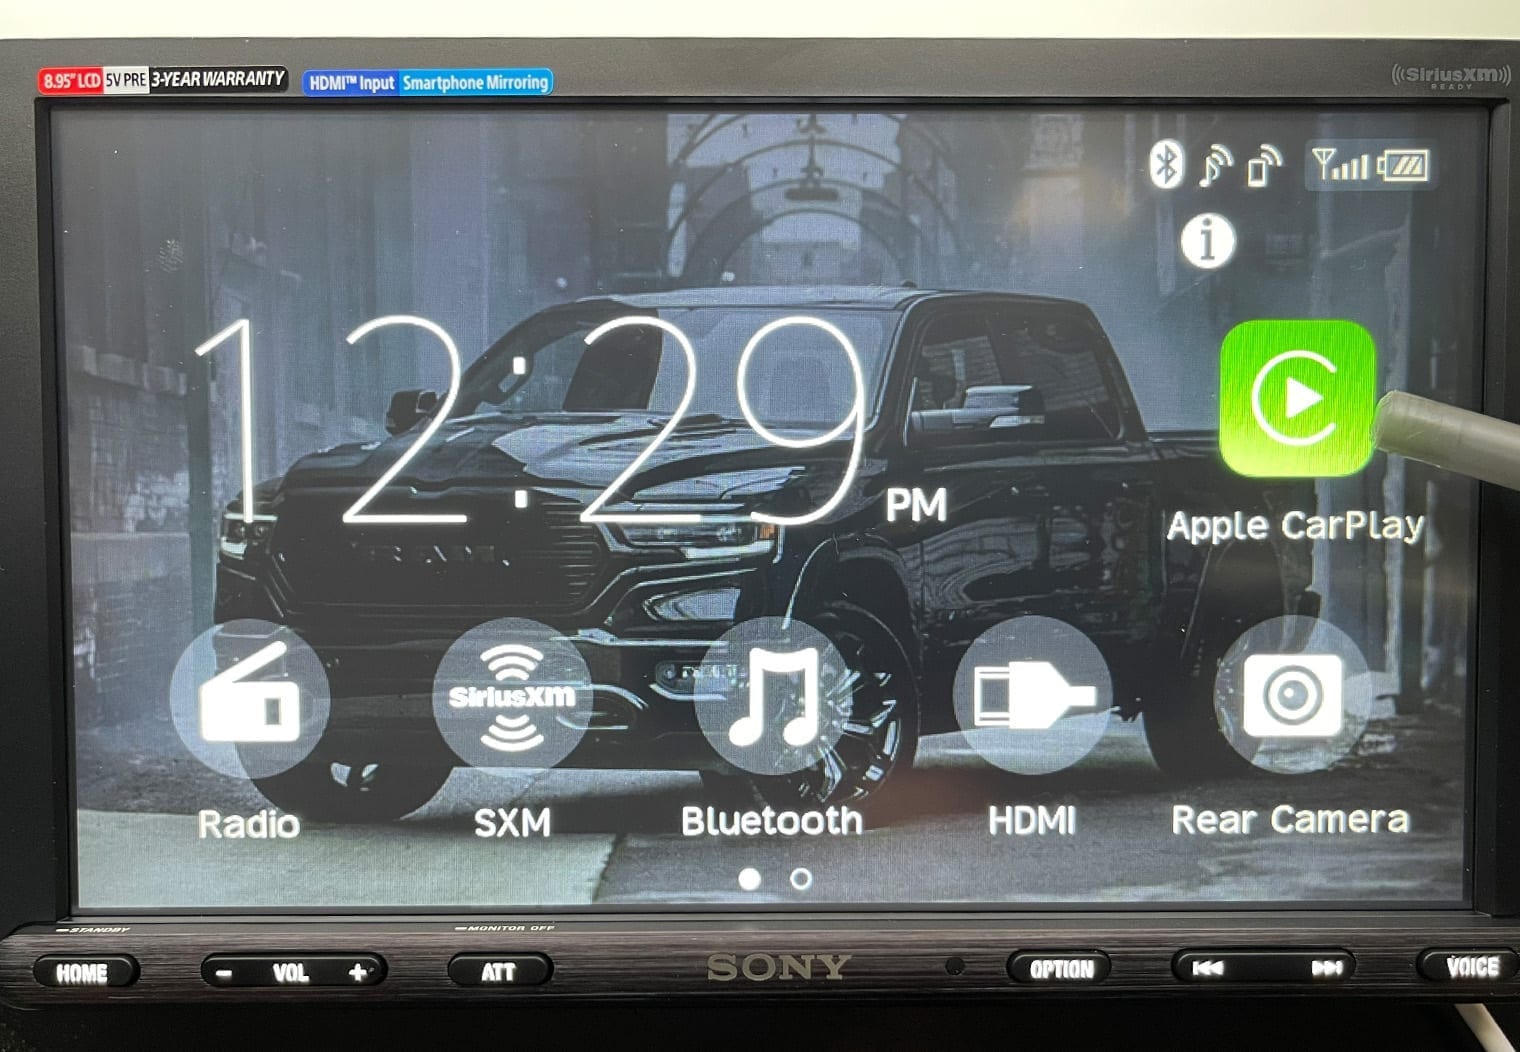 Sony XAV-AX8100 homescreen with apple device connected